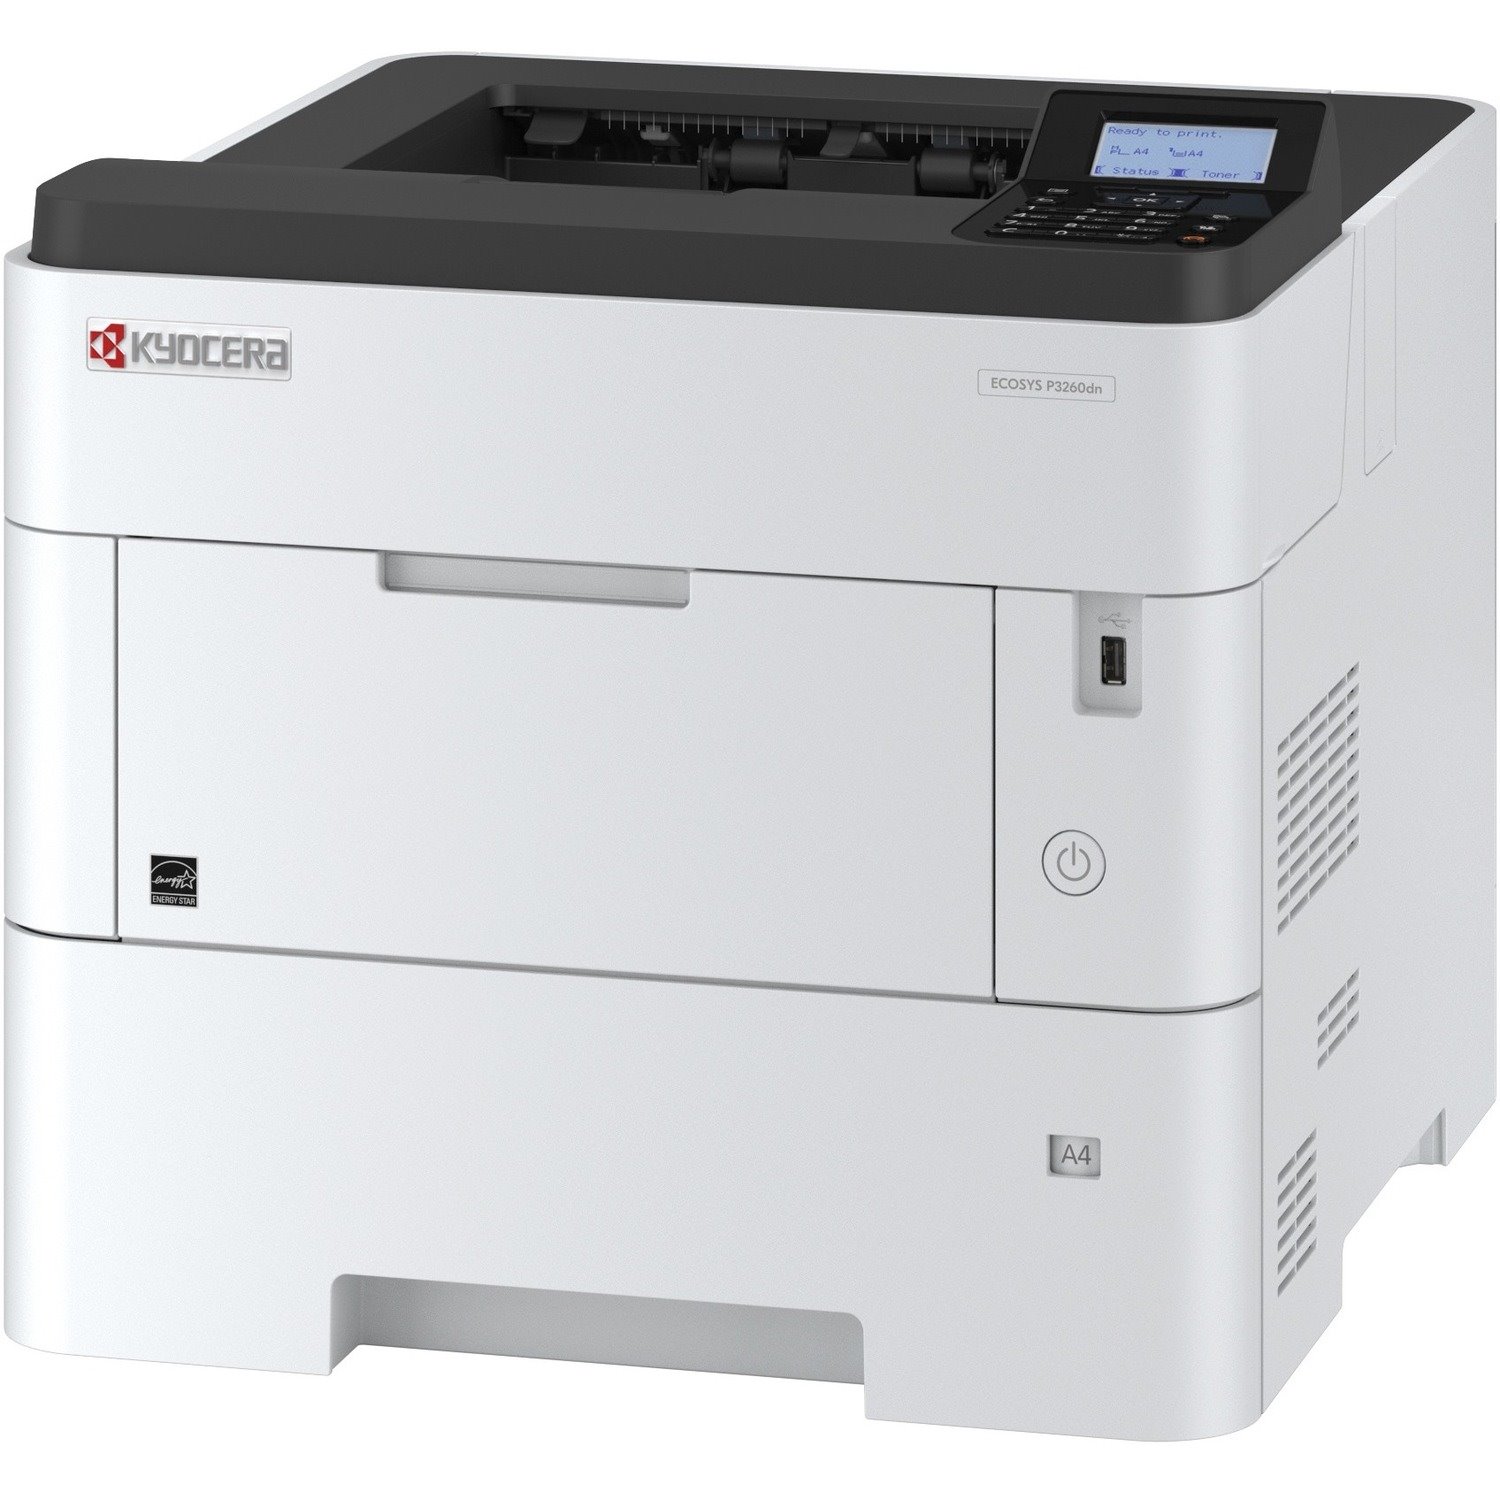 Kyocera Ecosys P3260dn Desktop Laser Printer - Monochrome